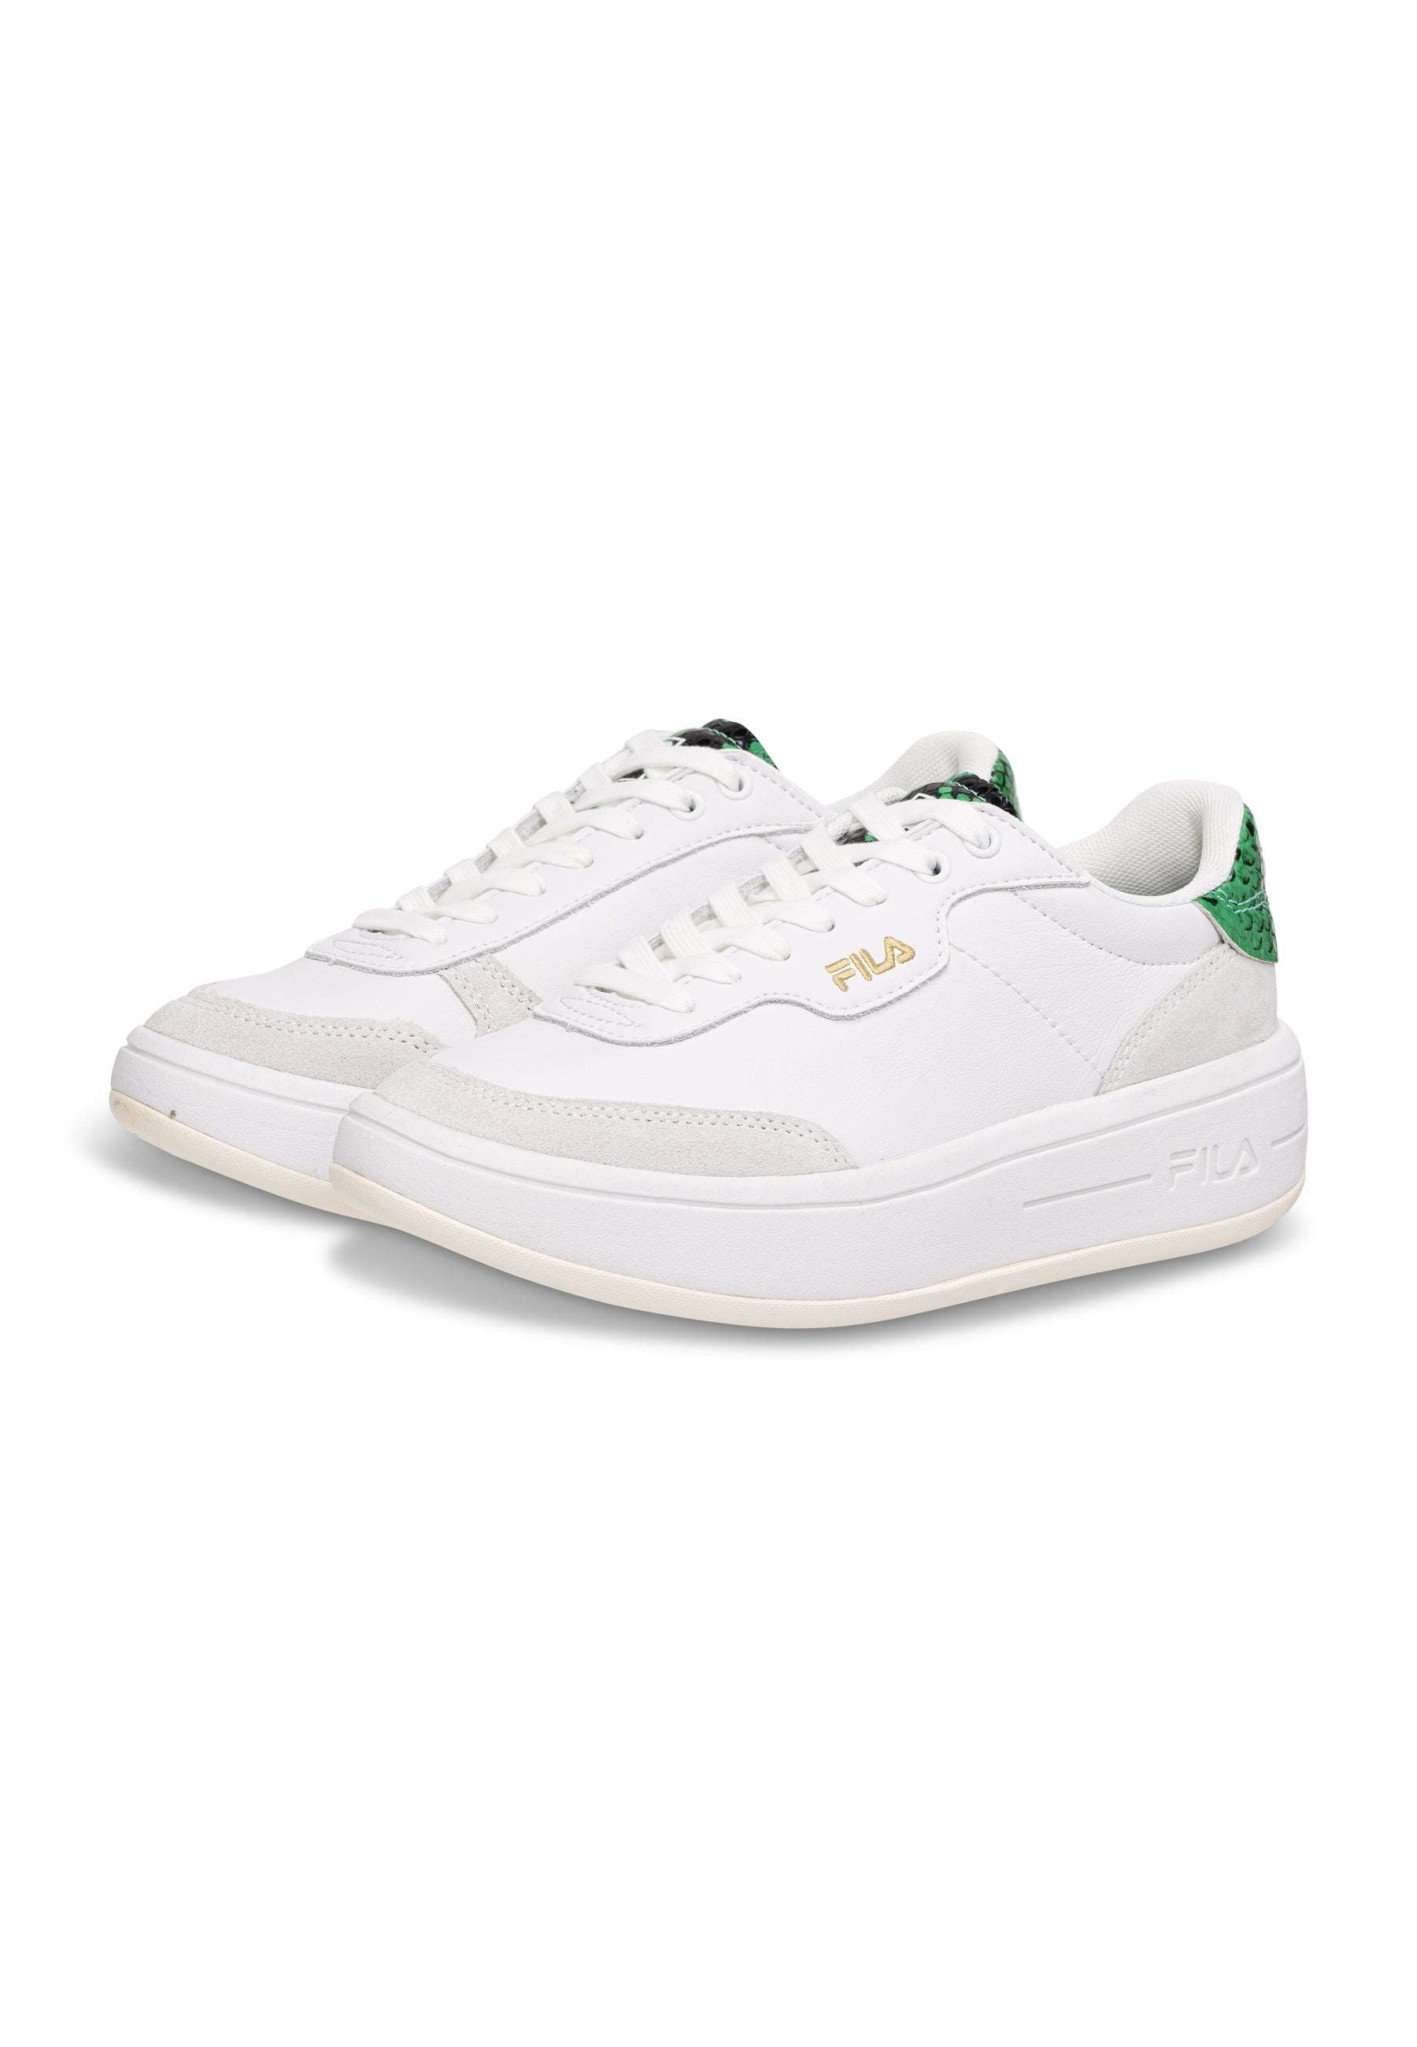 Fila Premium F Wmn in White-Verdant Green Sneakers Fila   